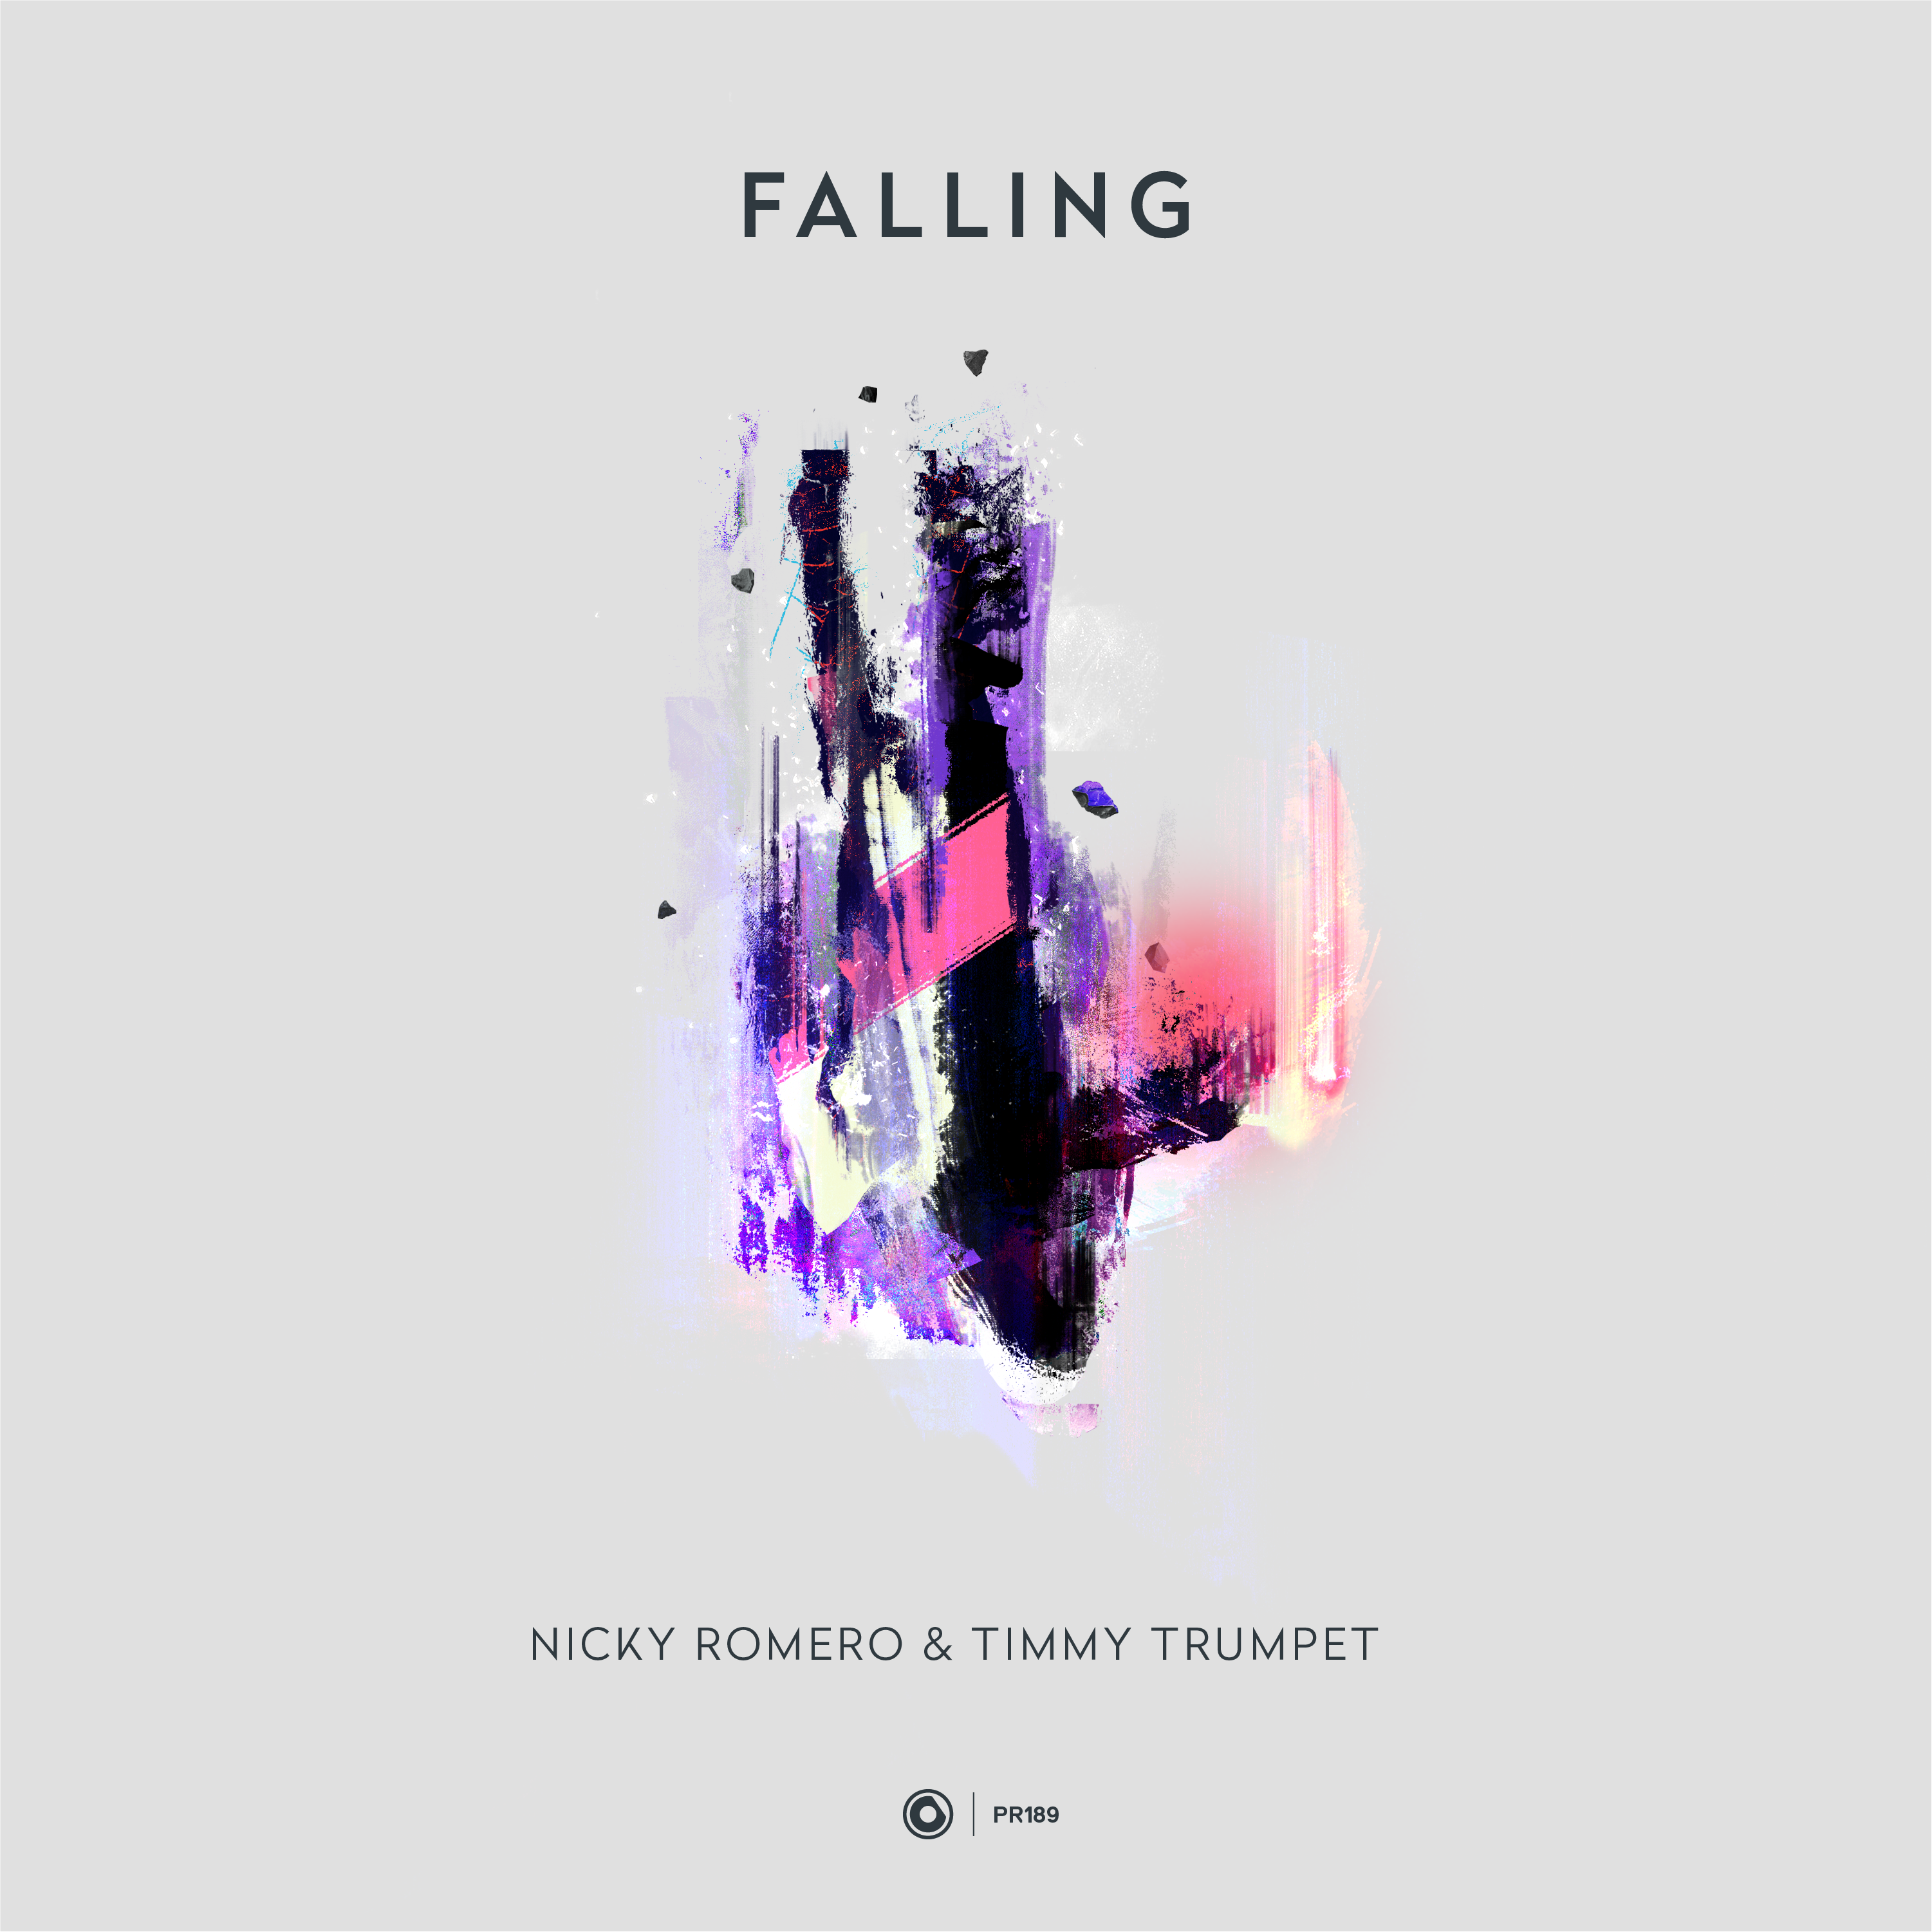 Nicky Romero & Timmy Trumpet - "Falling" single artwork